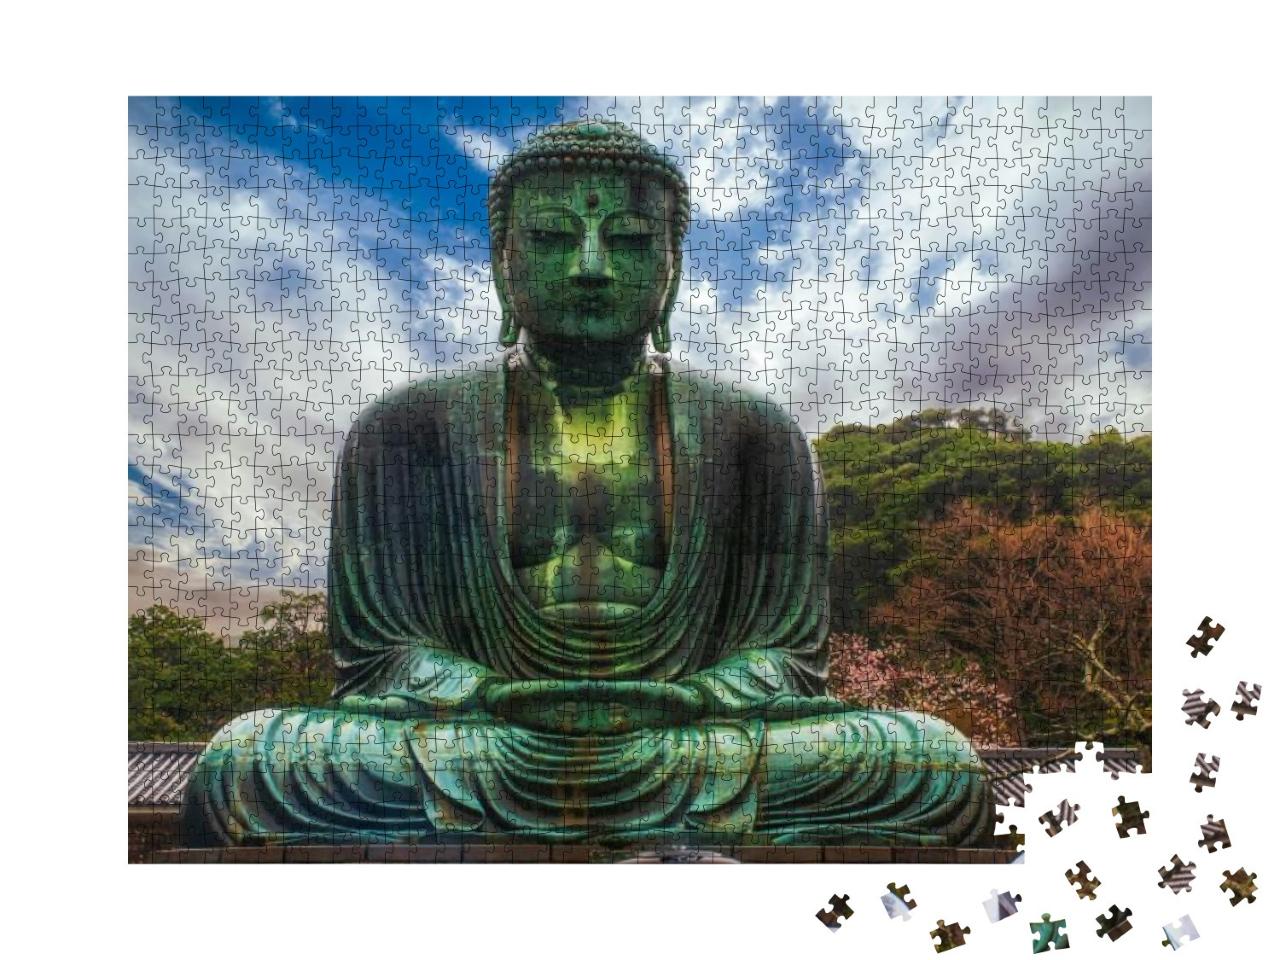 The Kamakura Daibutsu the Great Buddha of Kamakura in Kam... Jigsaw Puzzle with 1000 pieces